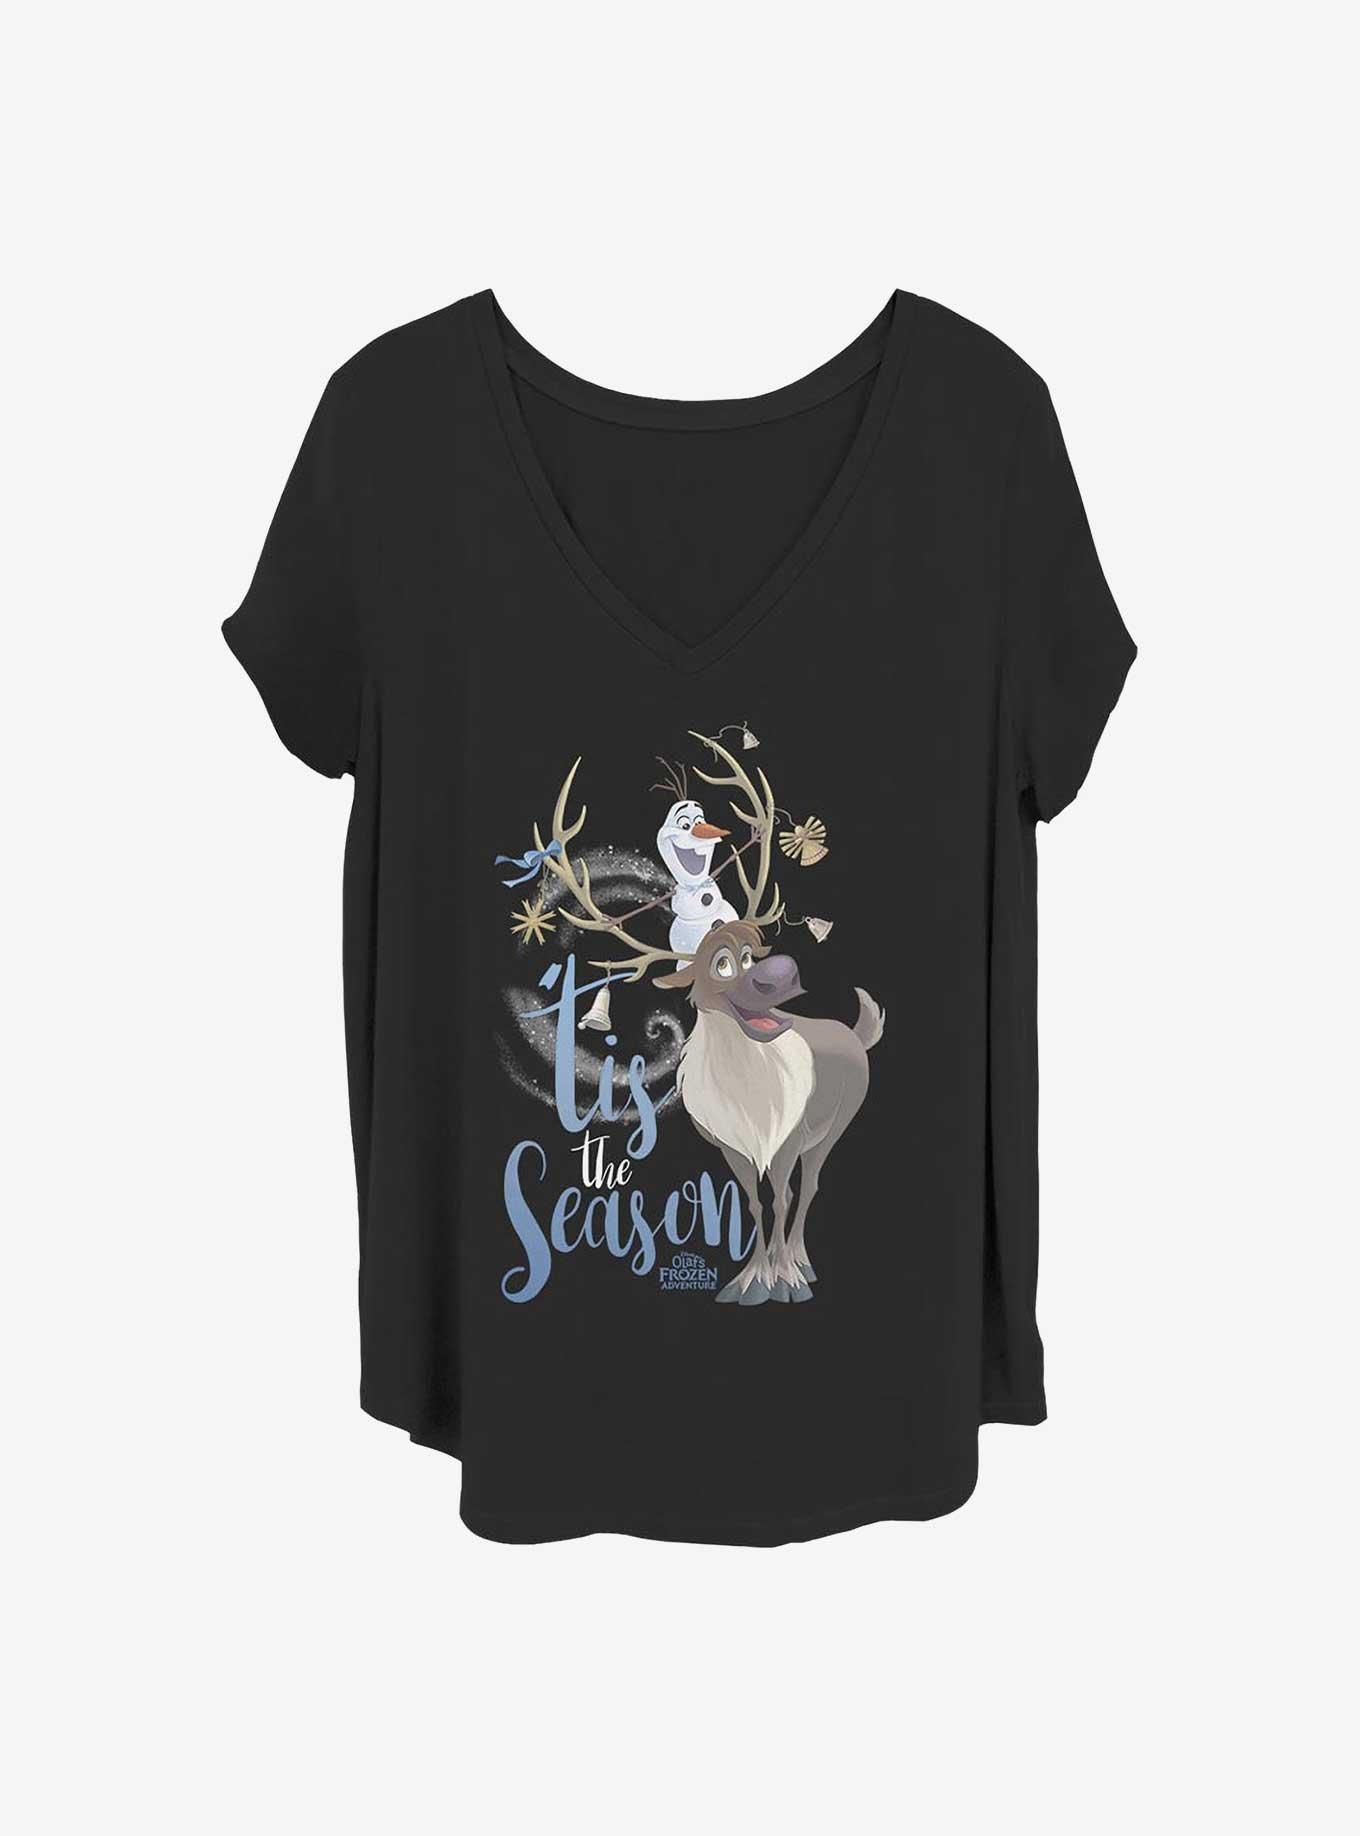 Disney Frozen Olaf Season Girls T-Shirt Plus